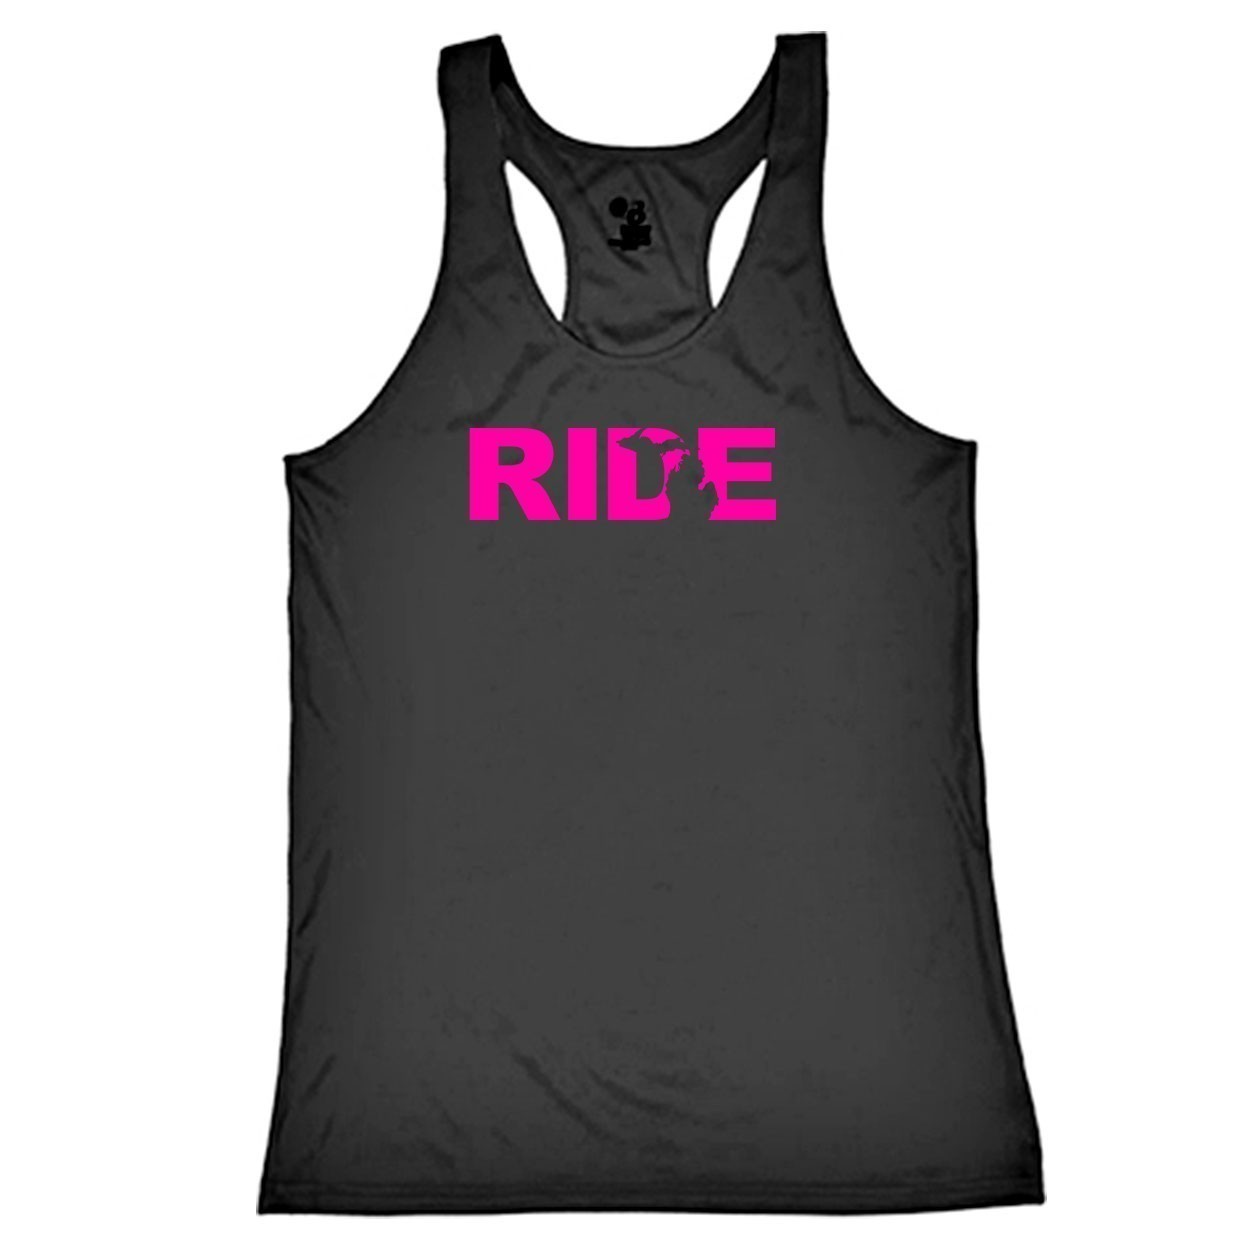 Ride Michigan Classic Youth Girls Performance Racerback Tank Top Black (Pink Logo)